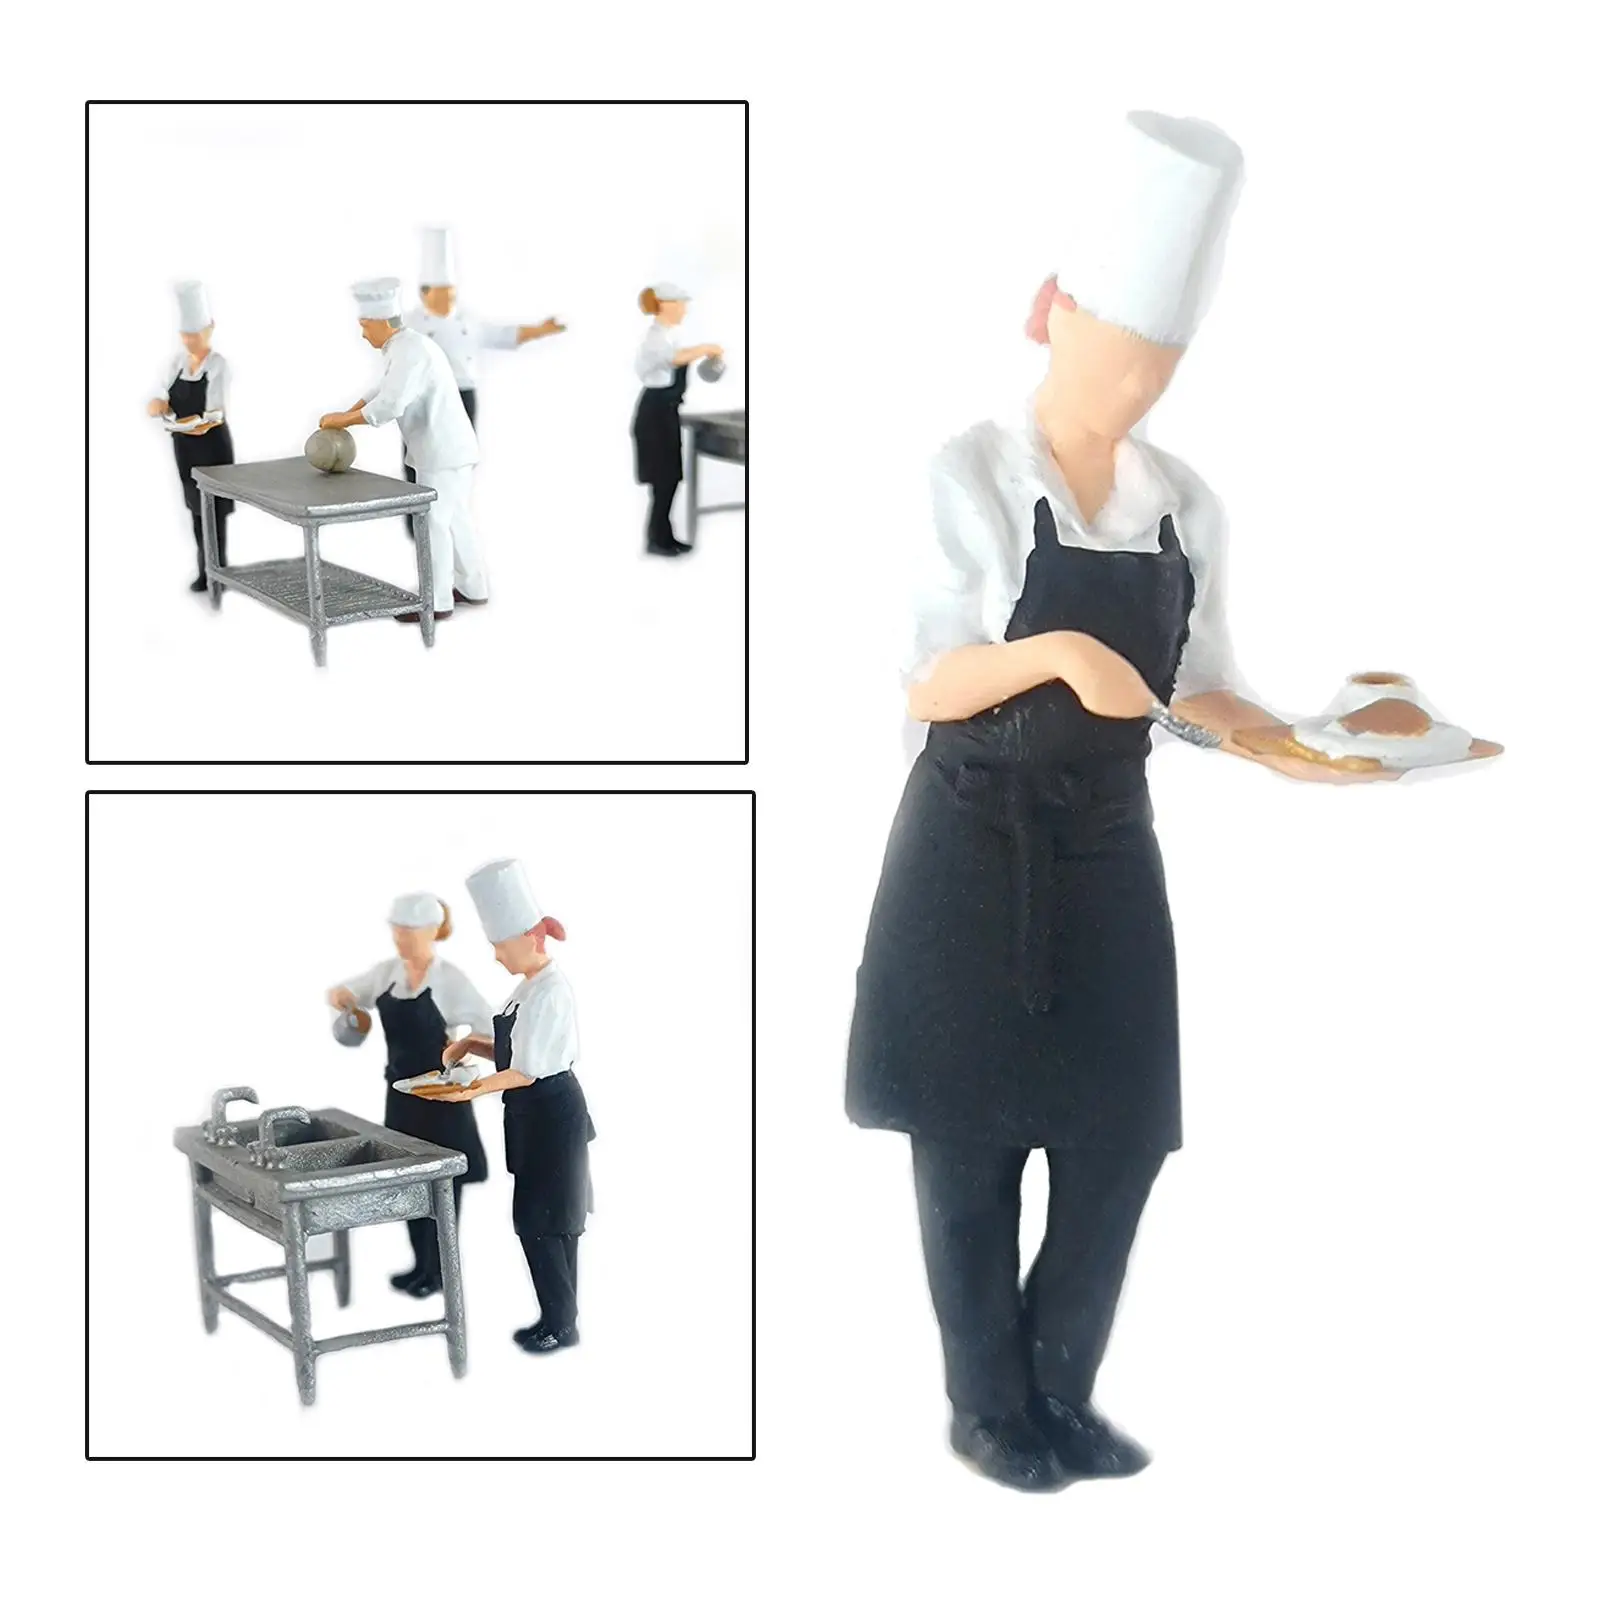  People Figures Restaurant Chef Figurines for Miniature Scenes